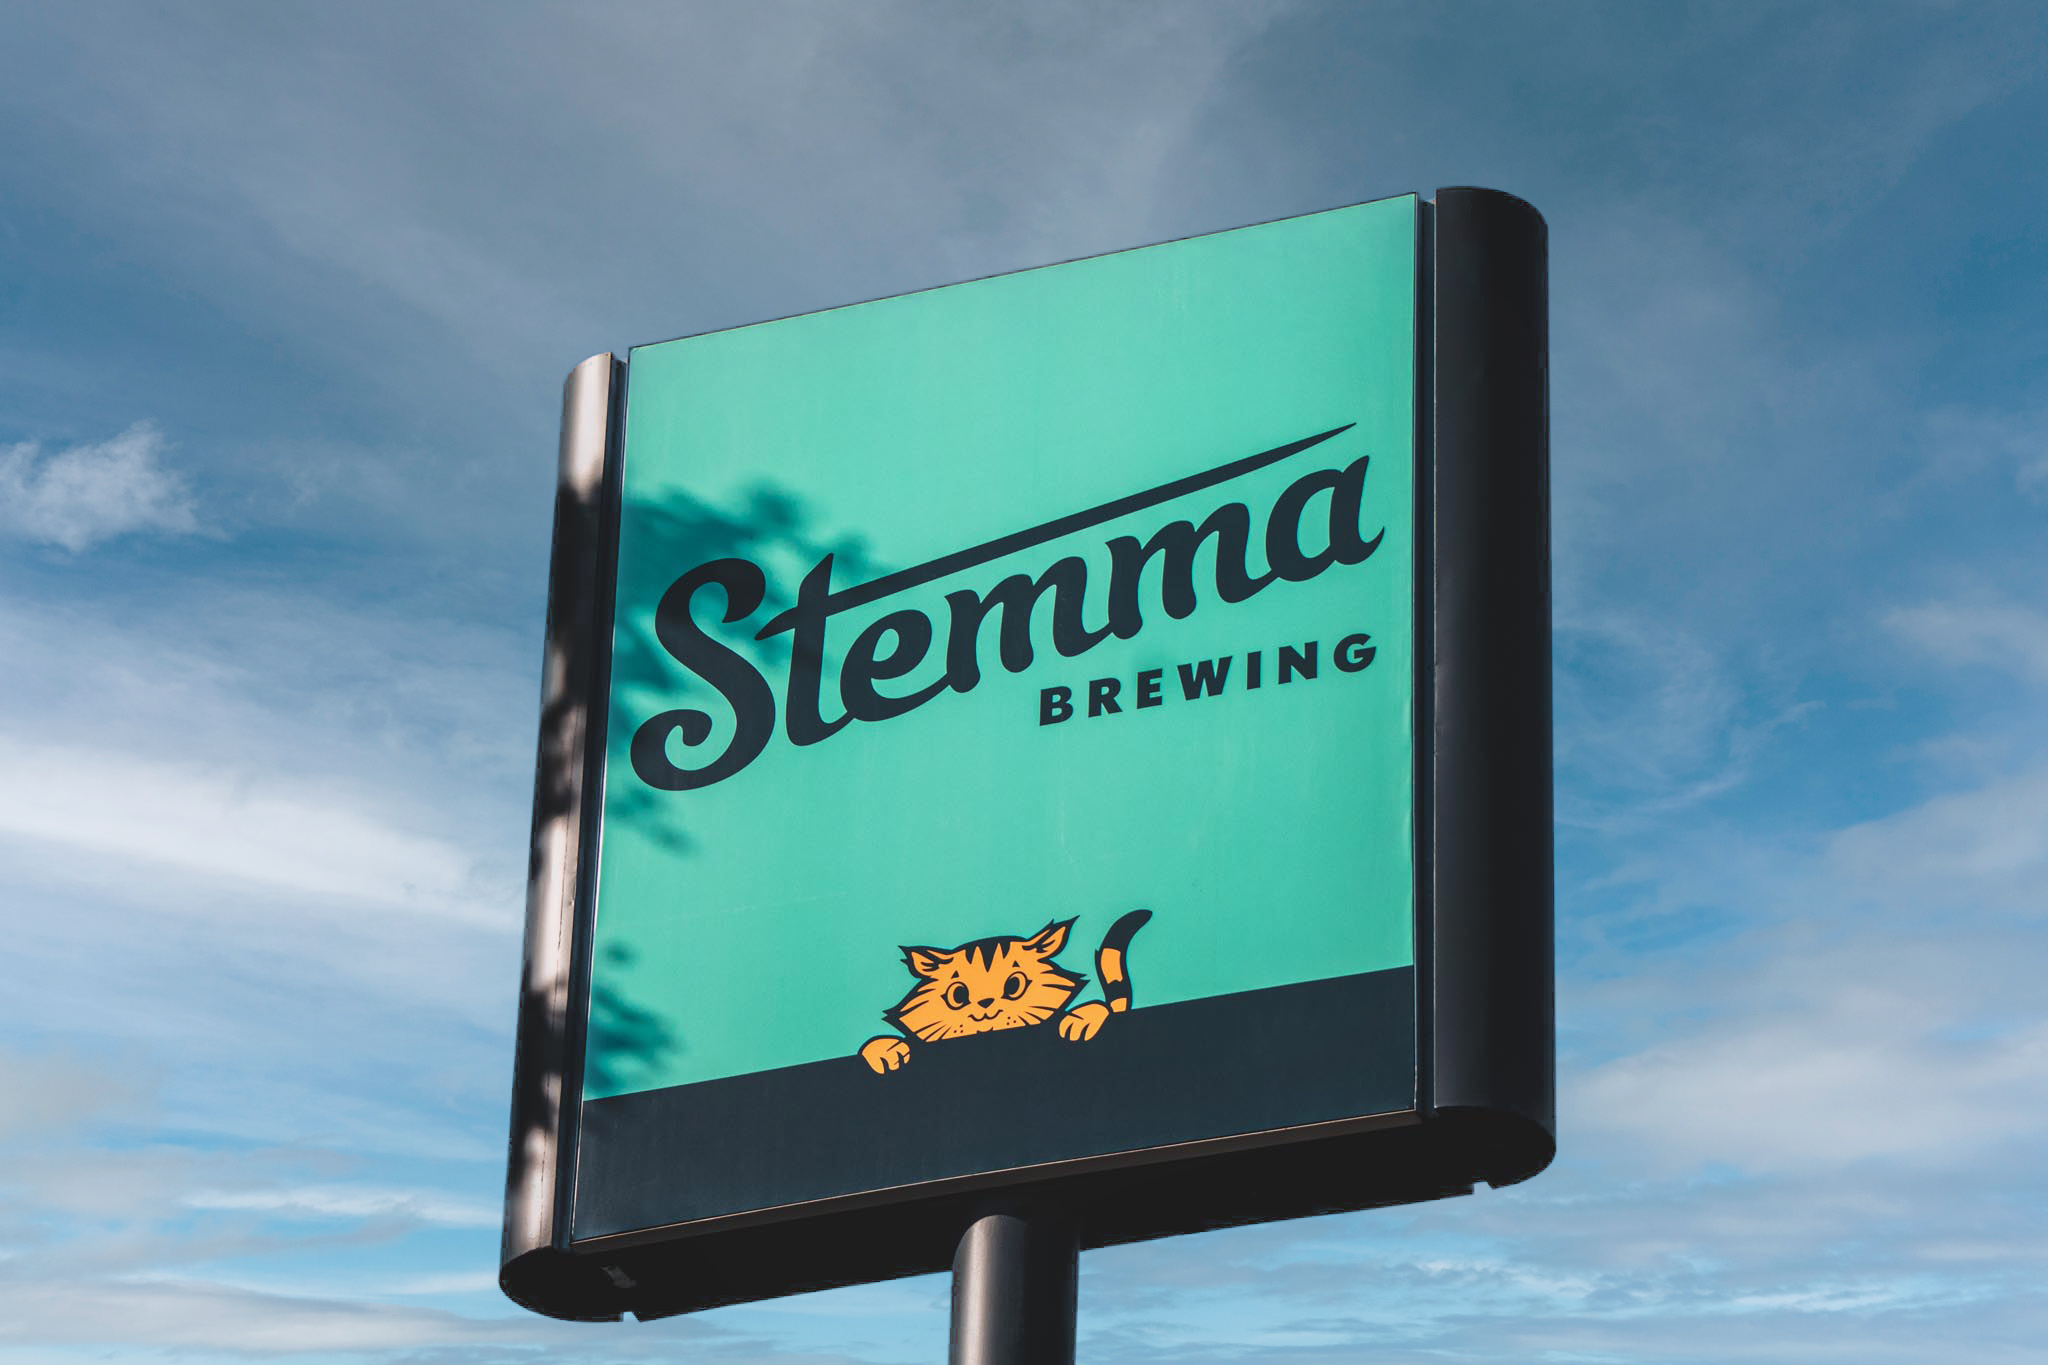 Stemma Brewing Pylon Sign